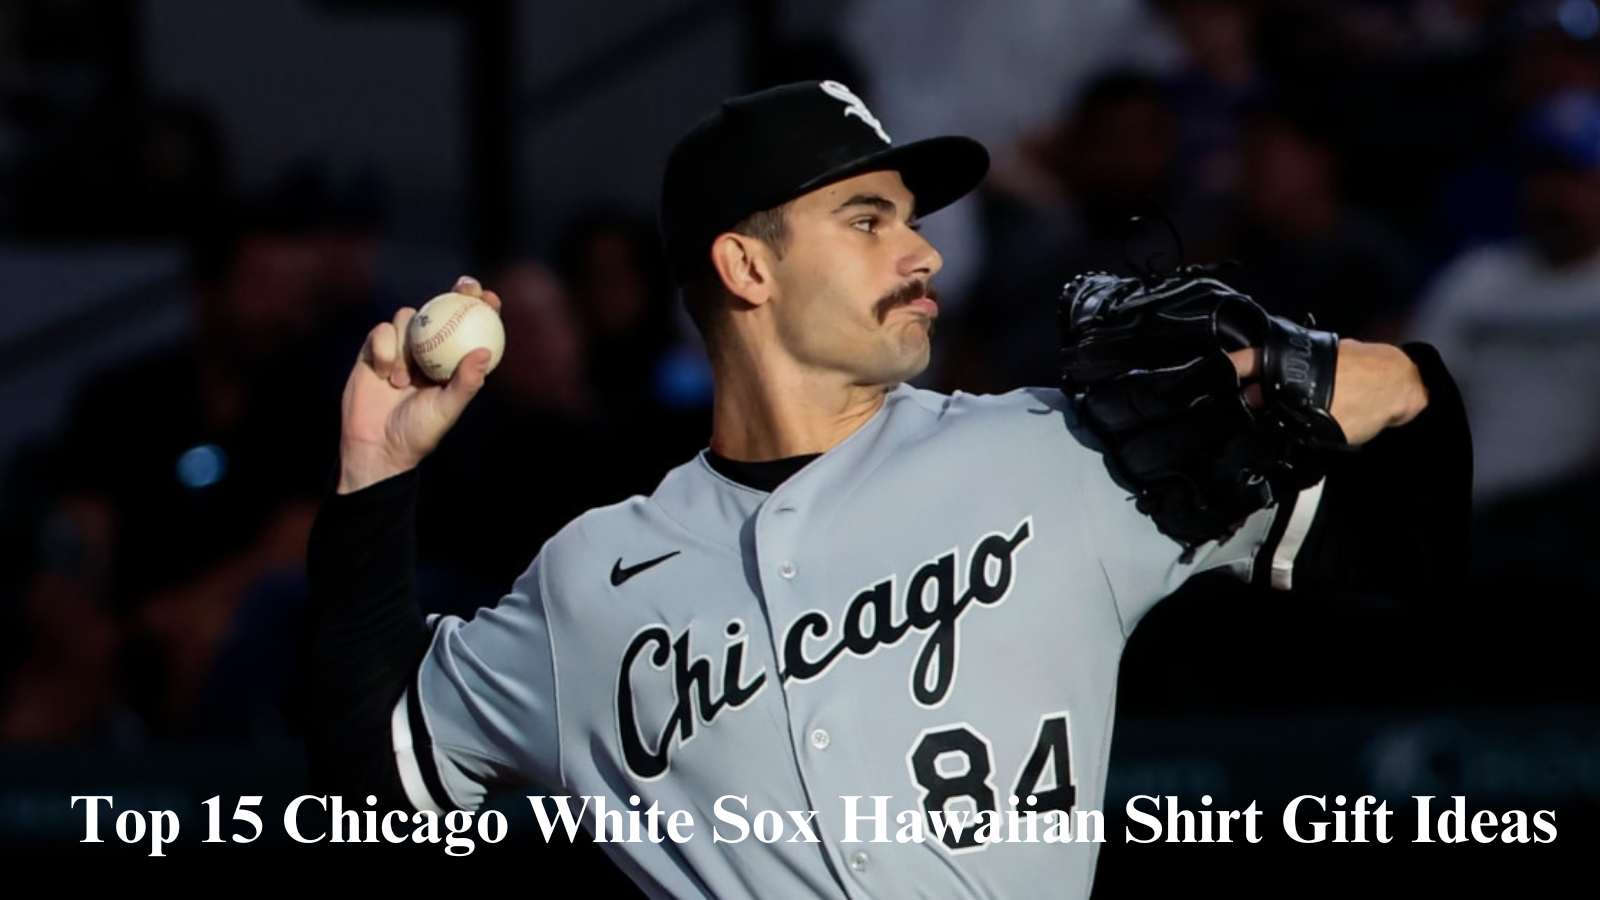 Top 15 Chicago White Sox Hawaiian Shirt Gift Ideas (2)